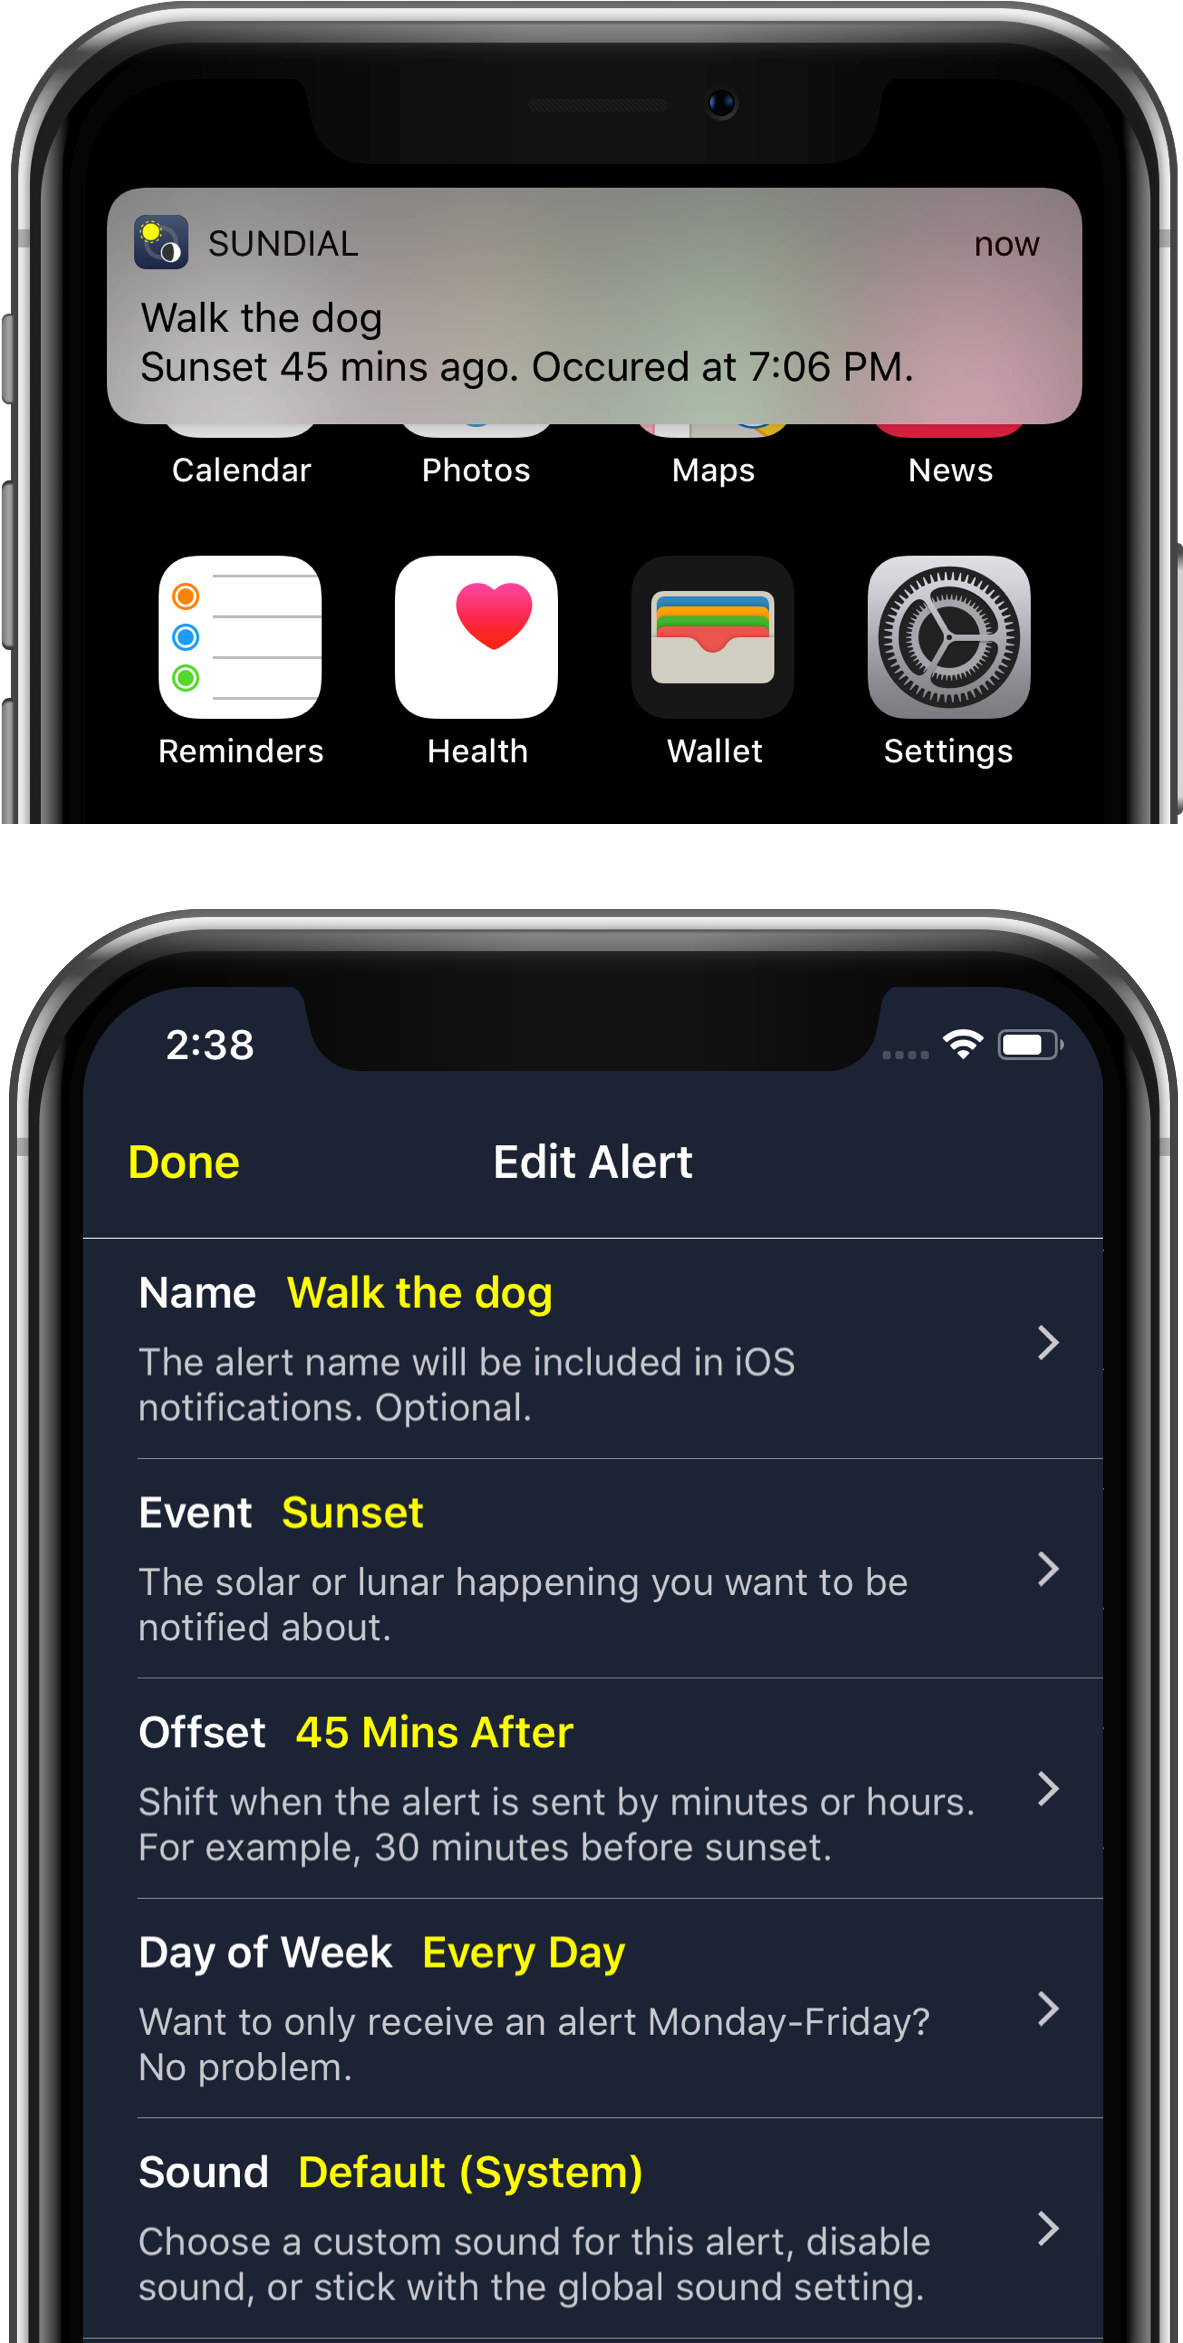 Sundial iPhone app screenshot